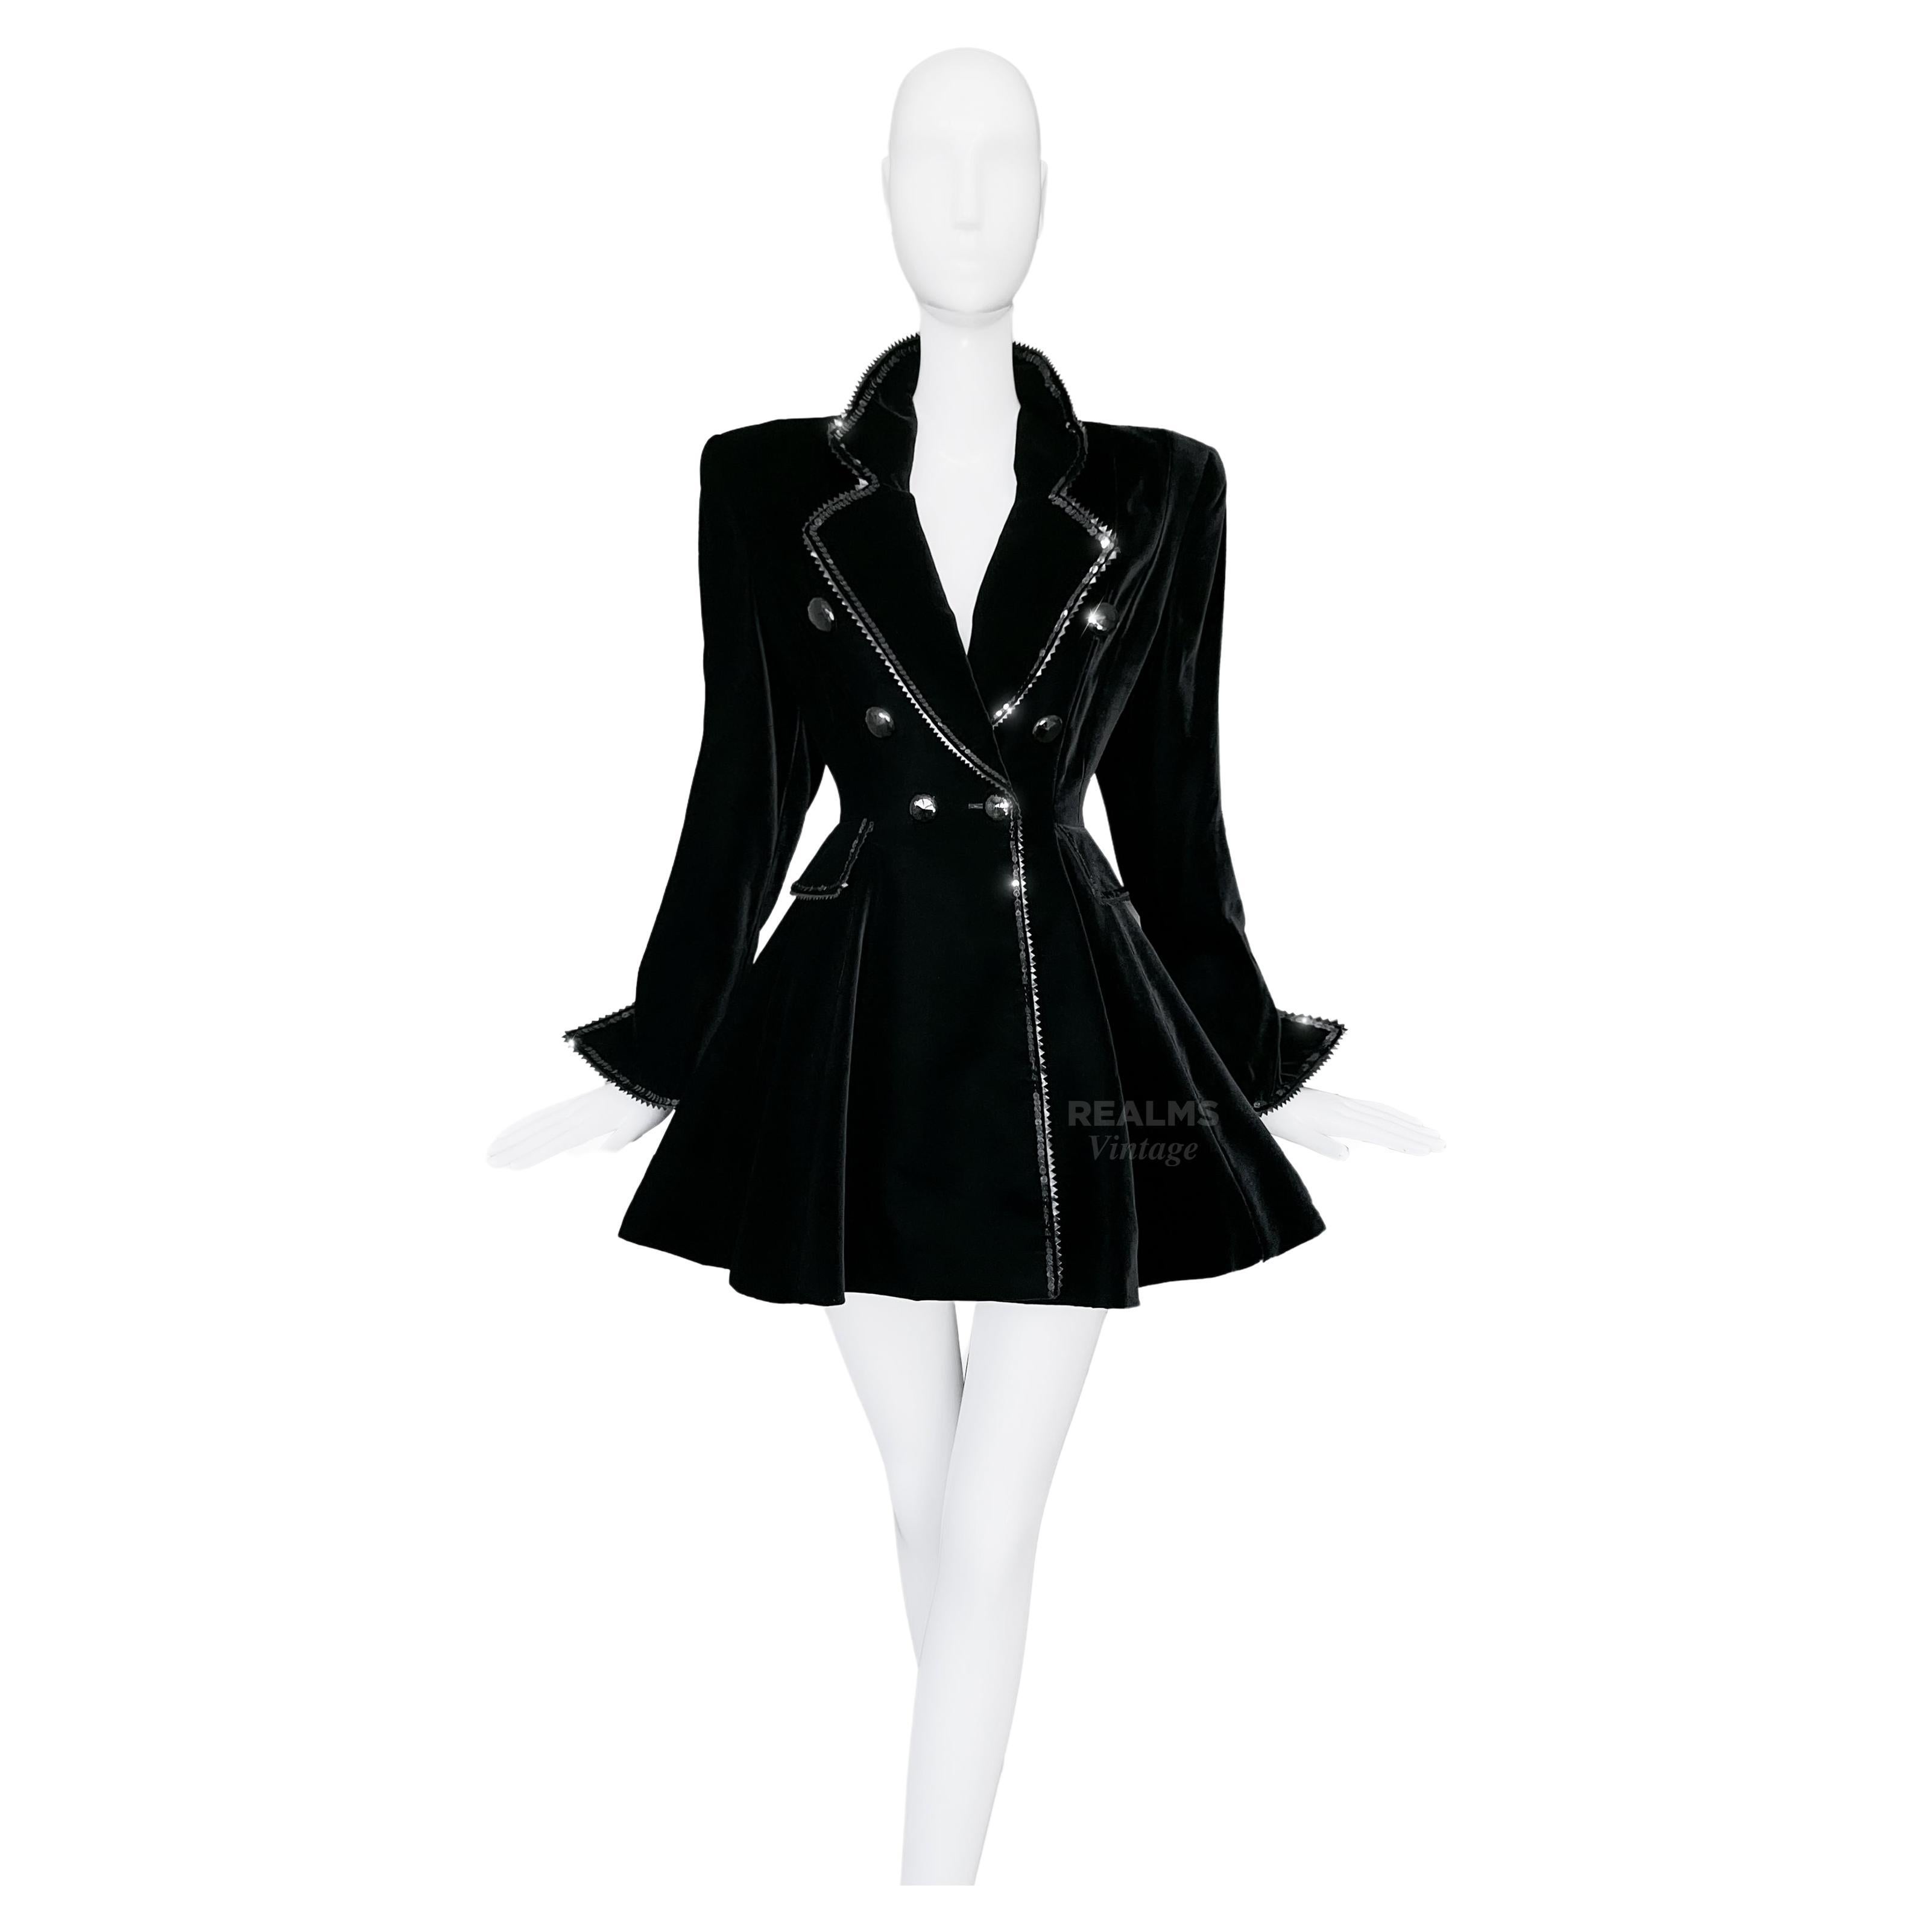 Veste en velours noir Christian Dior by Gianfranco Ferré FW 1994 en vente